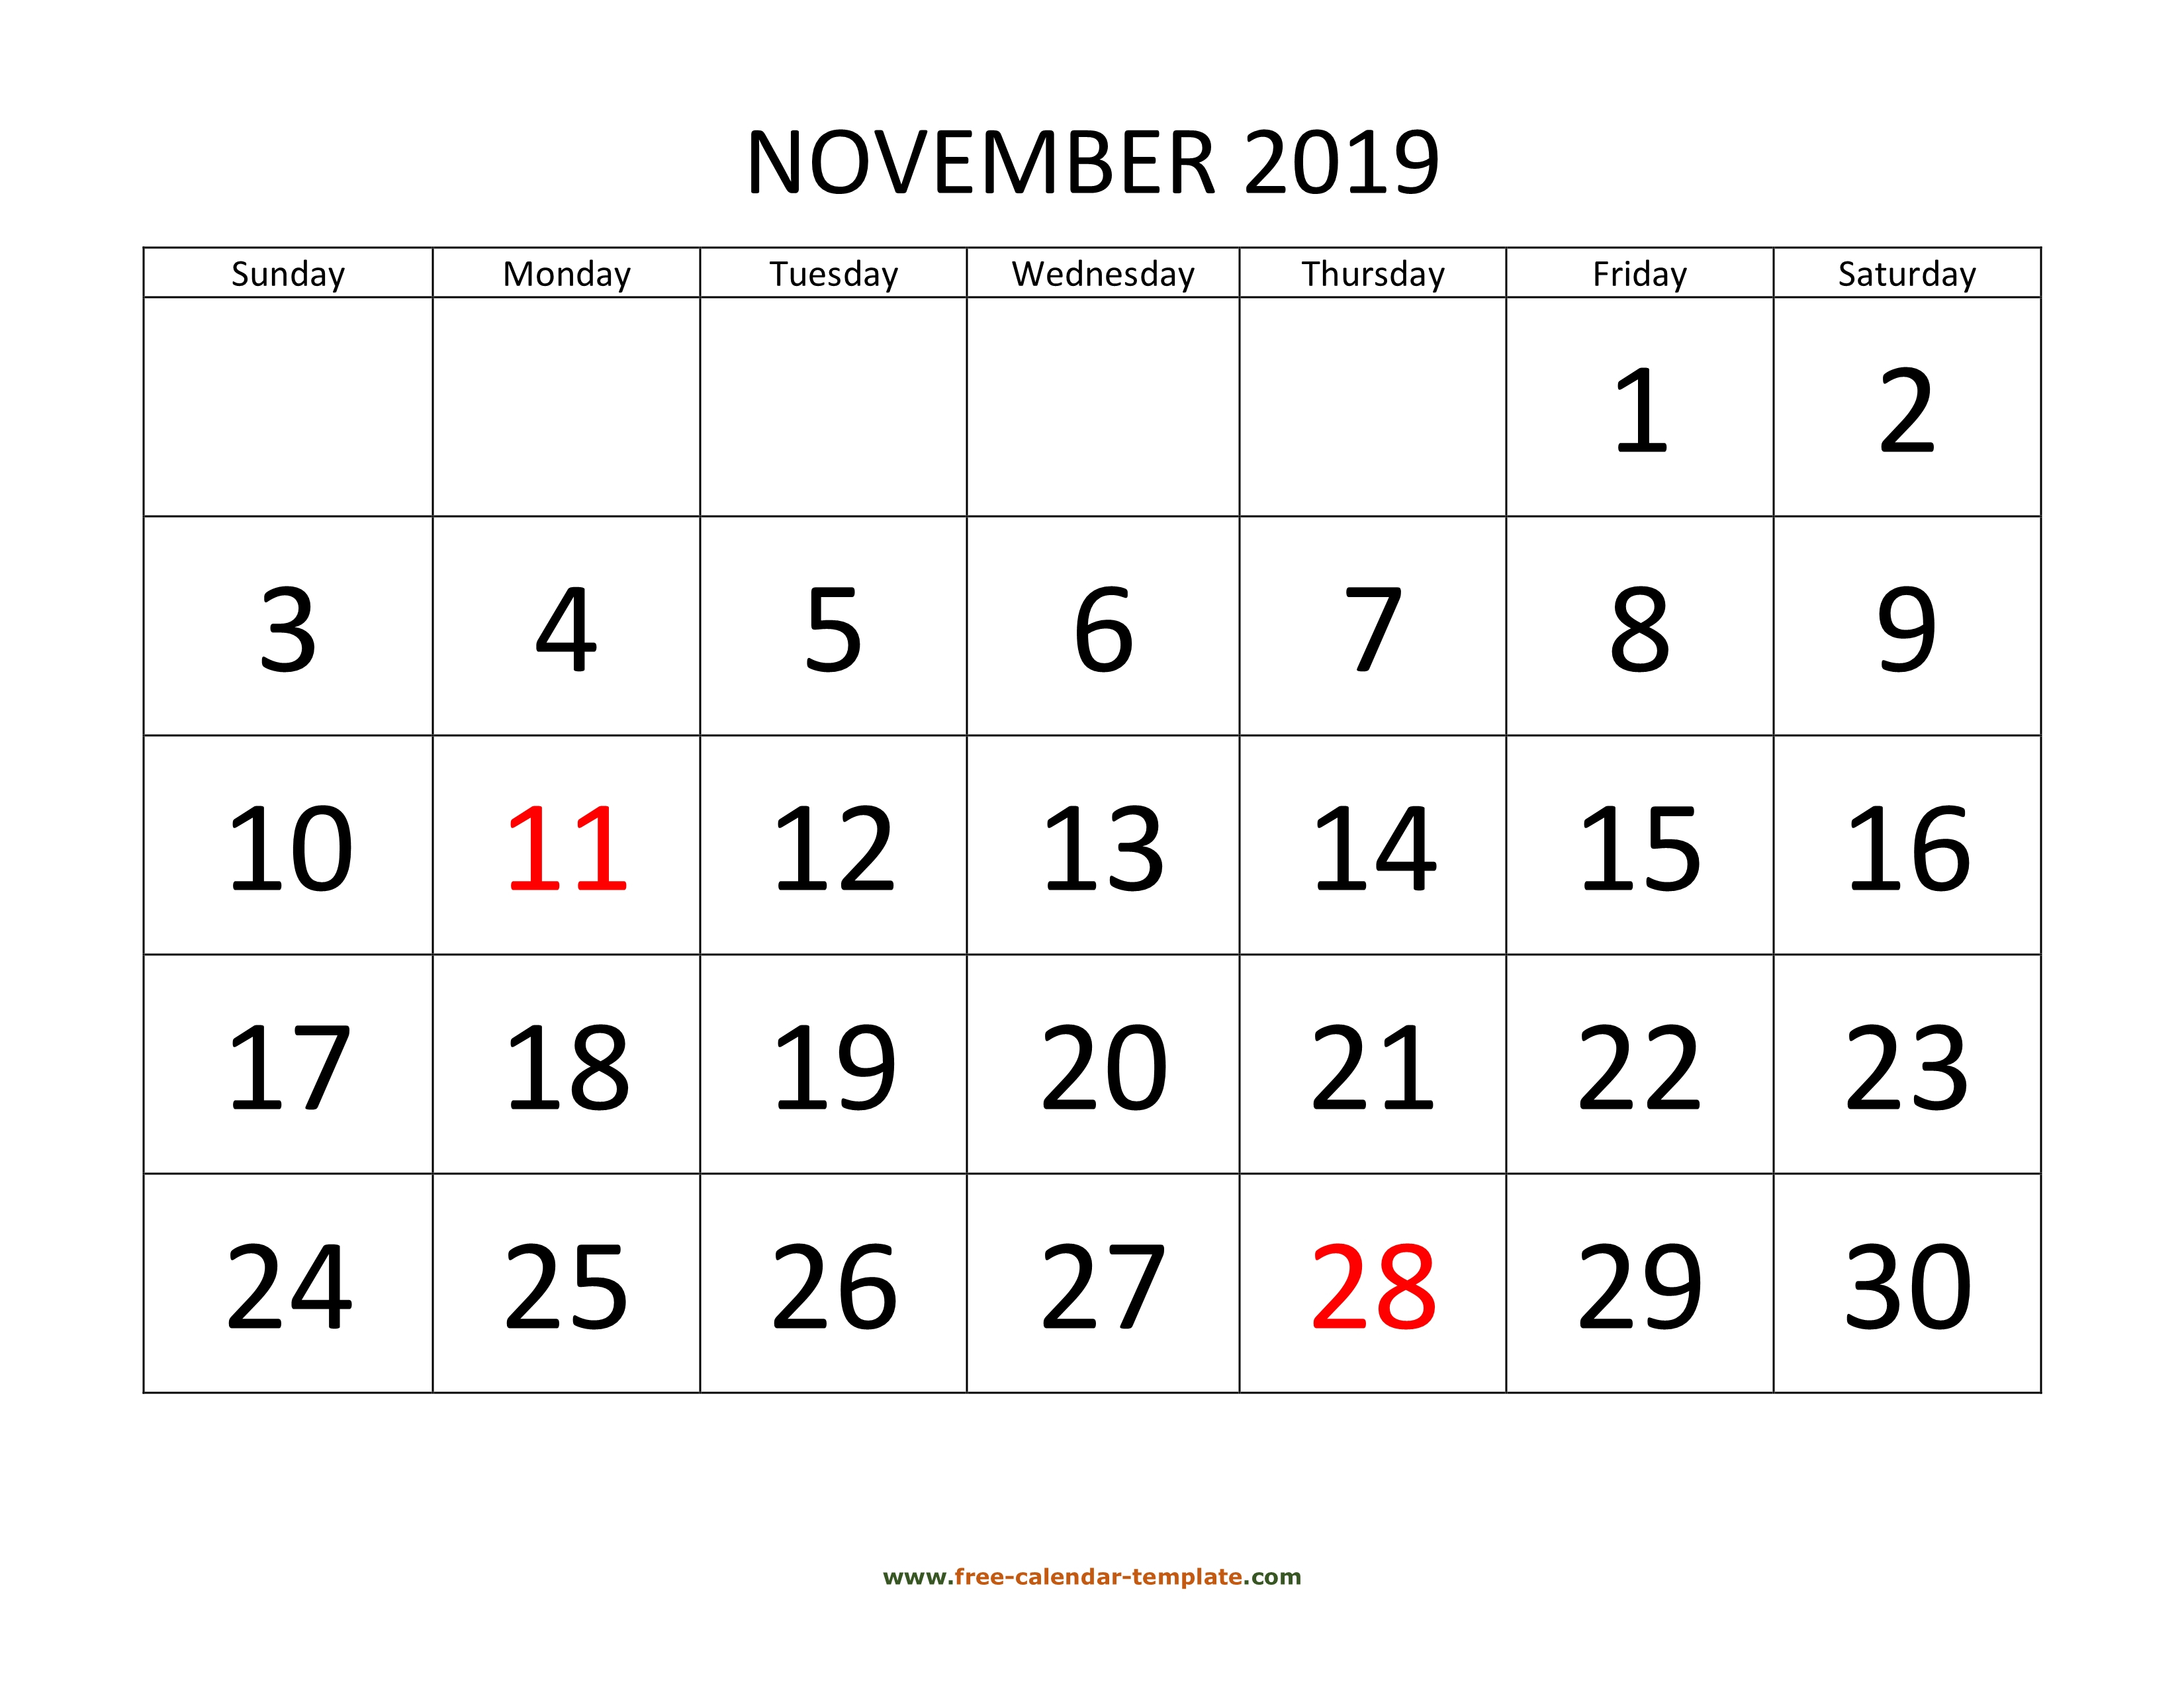 November 2019 Free Calendar Tempplate | Free-Calendar